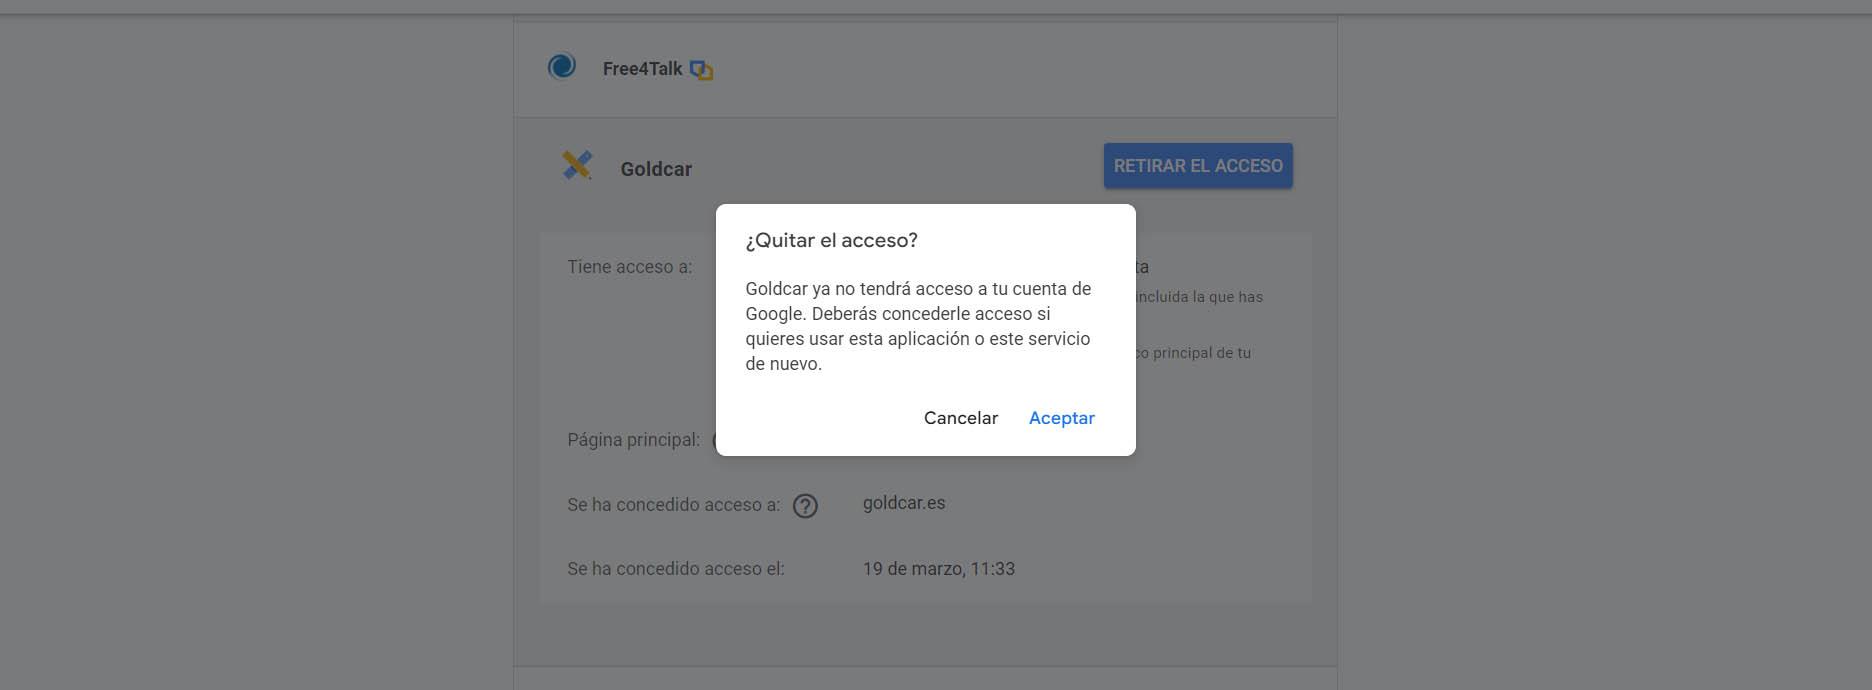 Remove access to a Google account